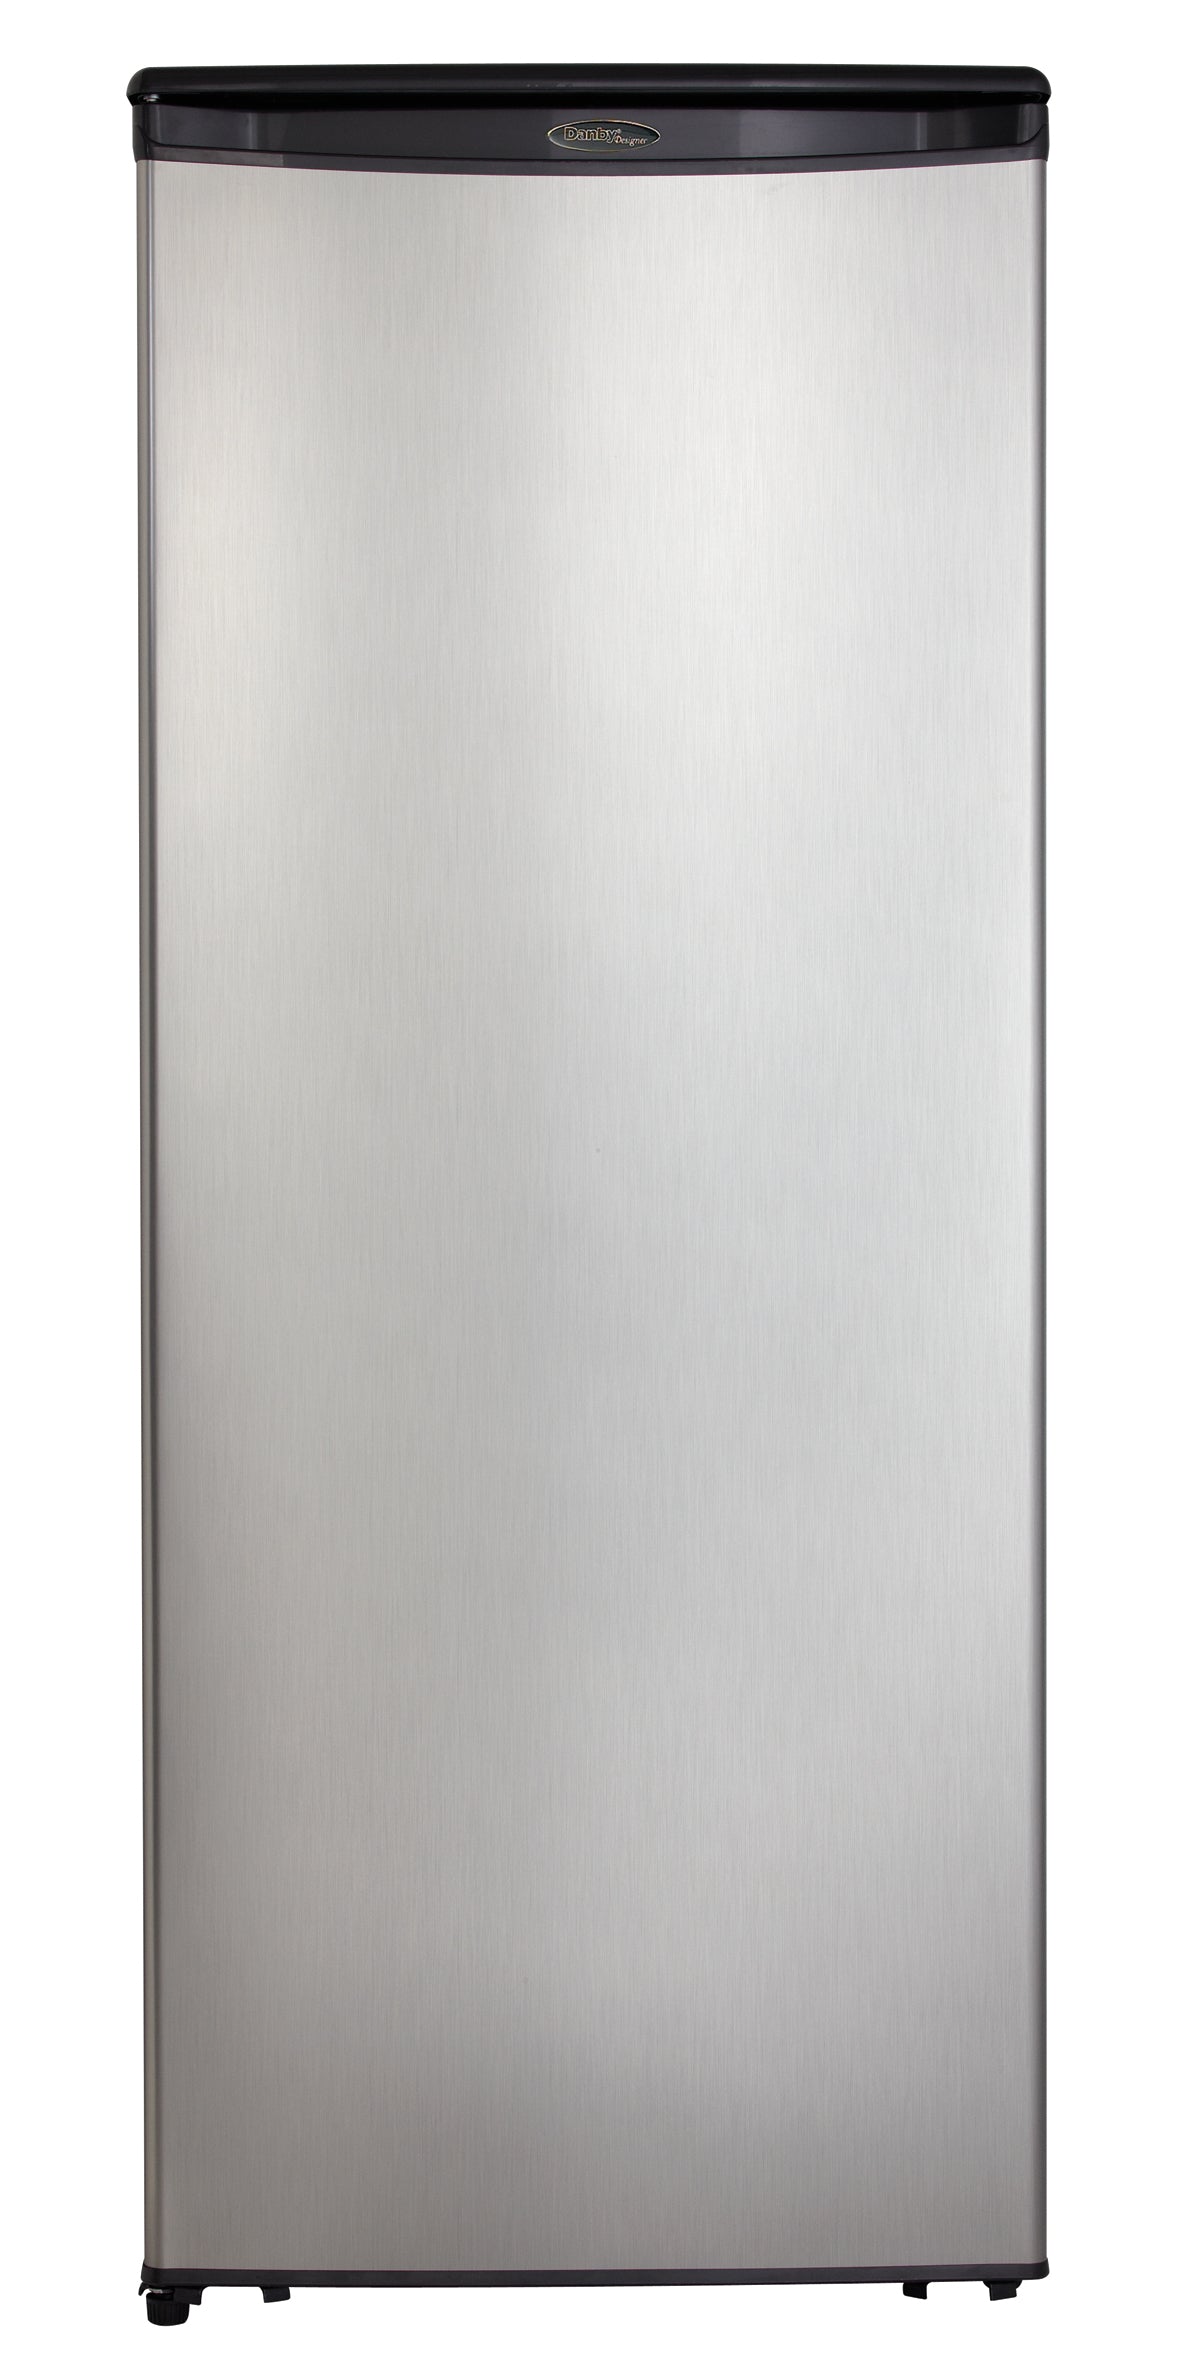 Danby - 23.9 Inch 11 cu. ft Mini Fridge Refrigerator in Stainless - DAR110A1BSLDD